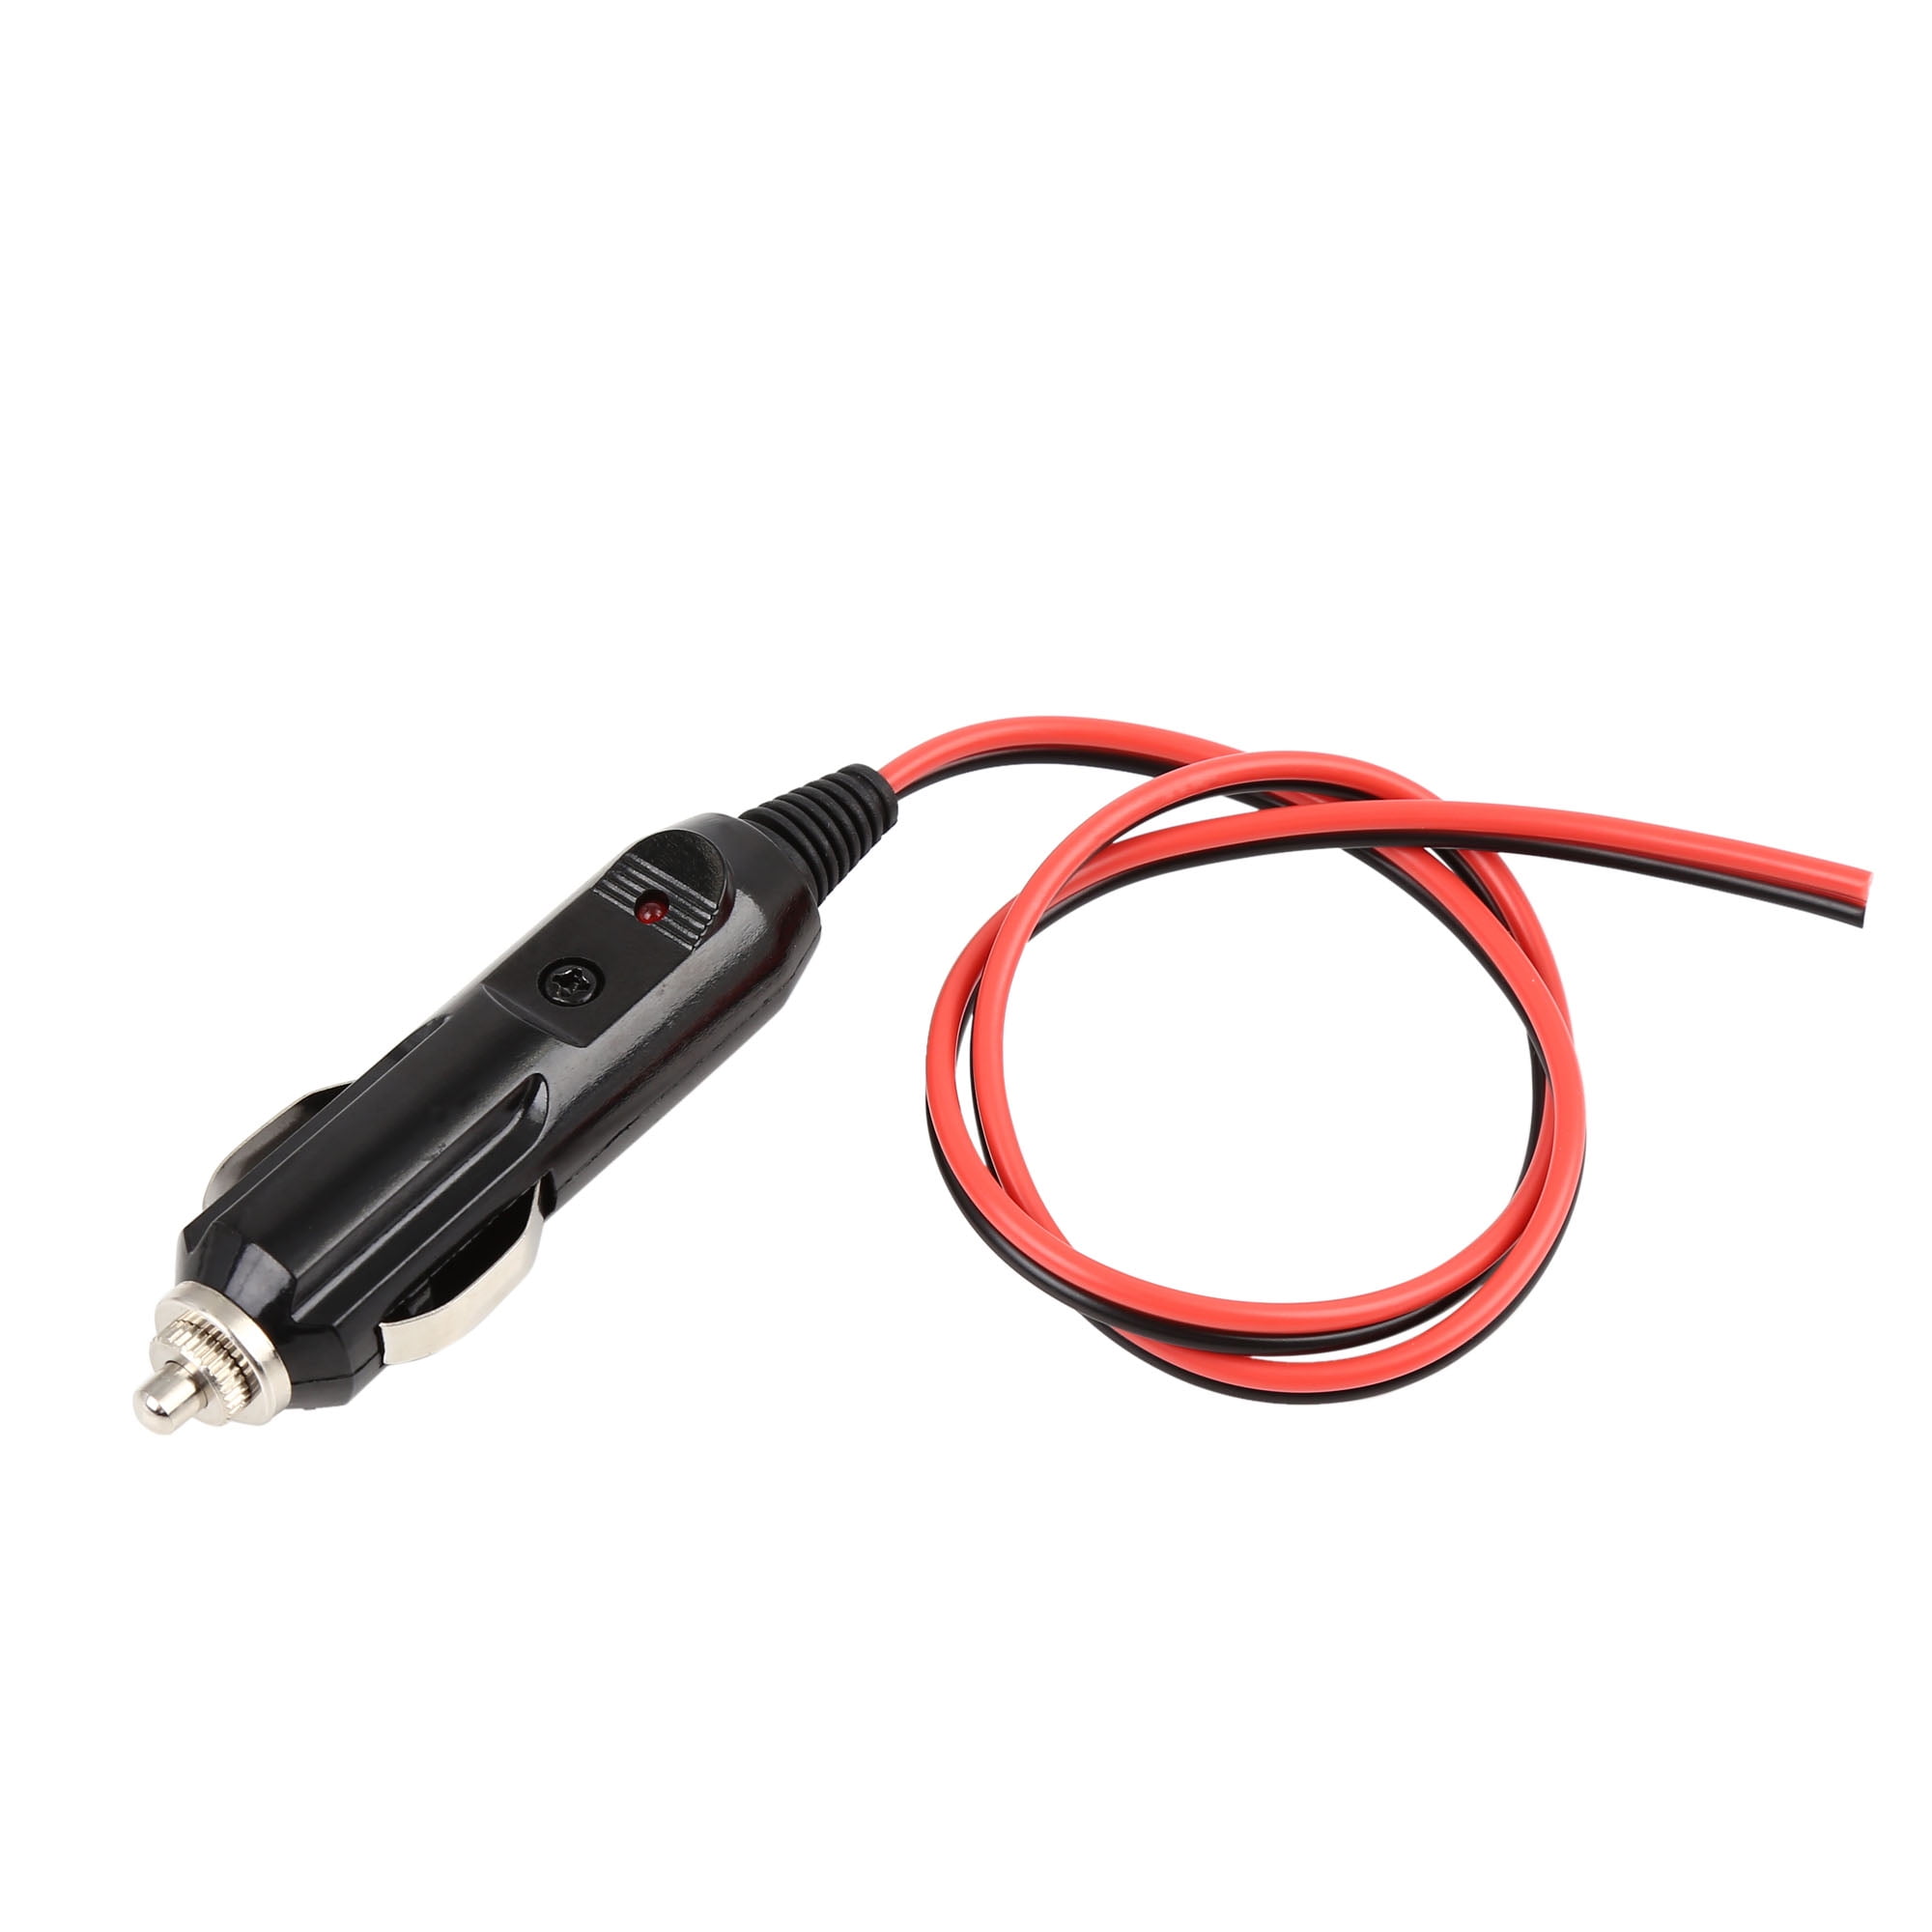 Power Adapters, Car Cigarette Lighter Plug